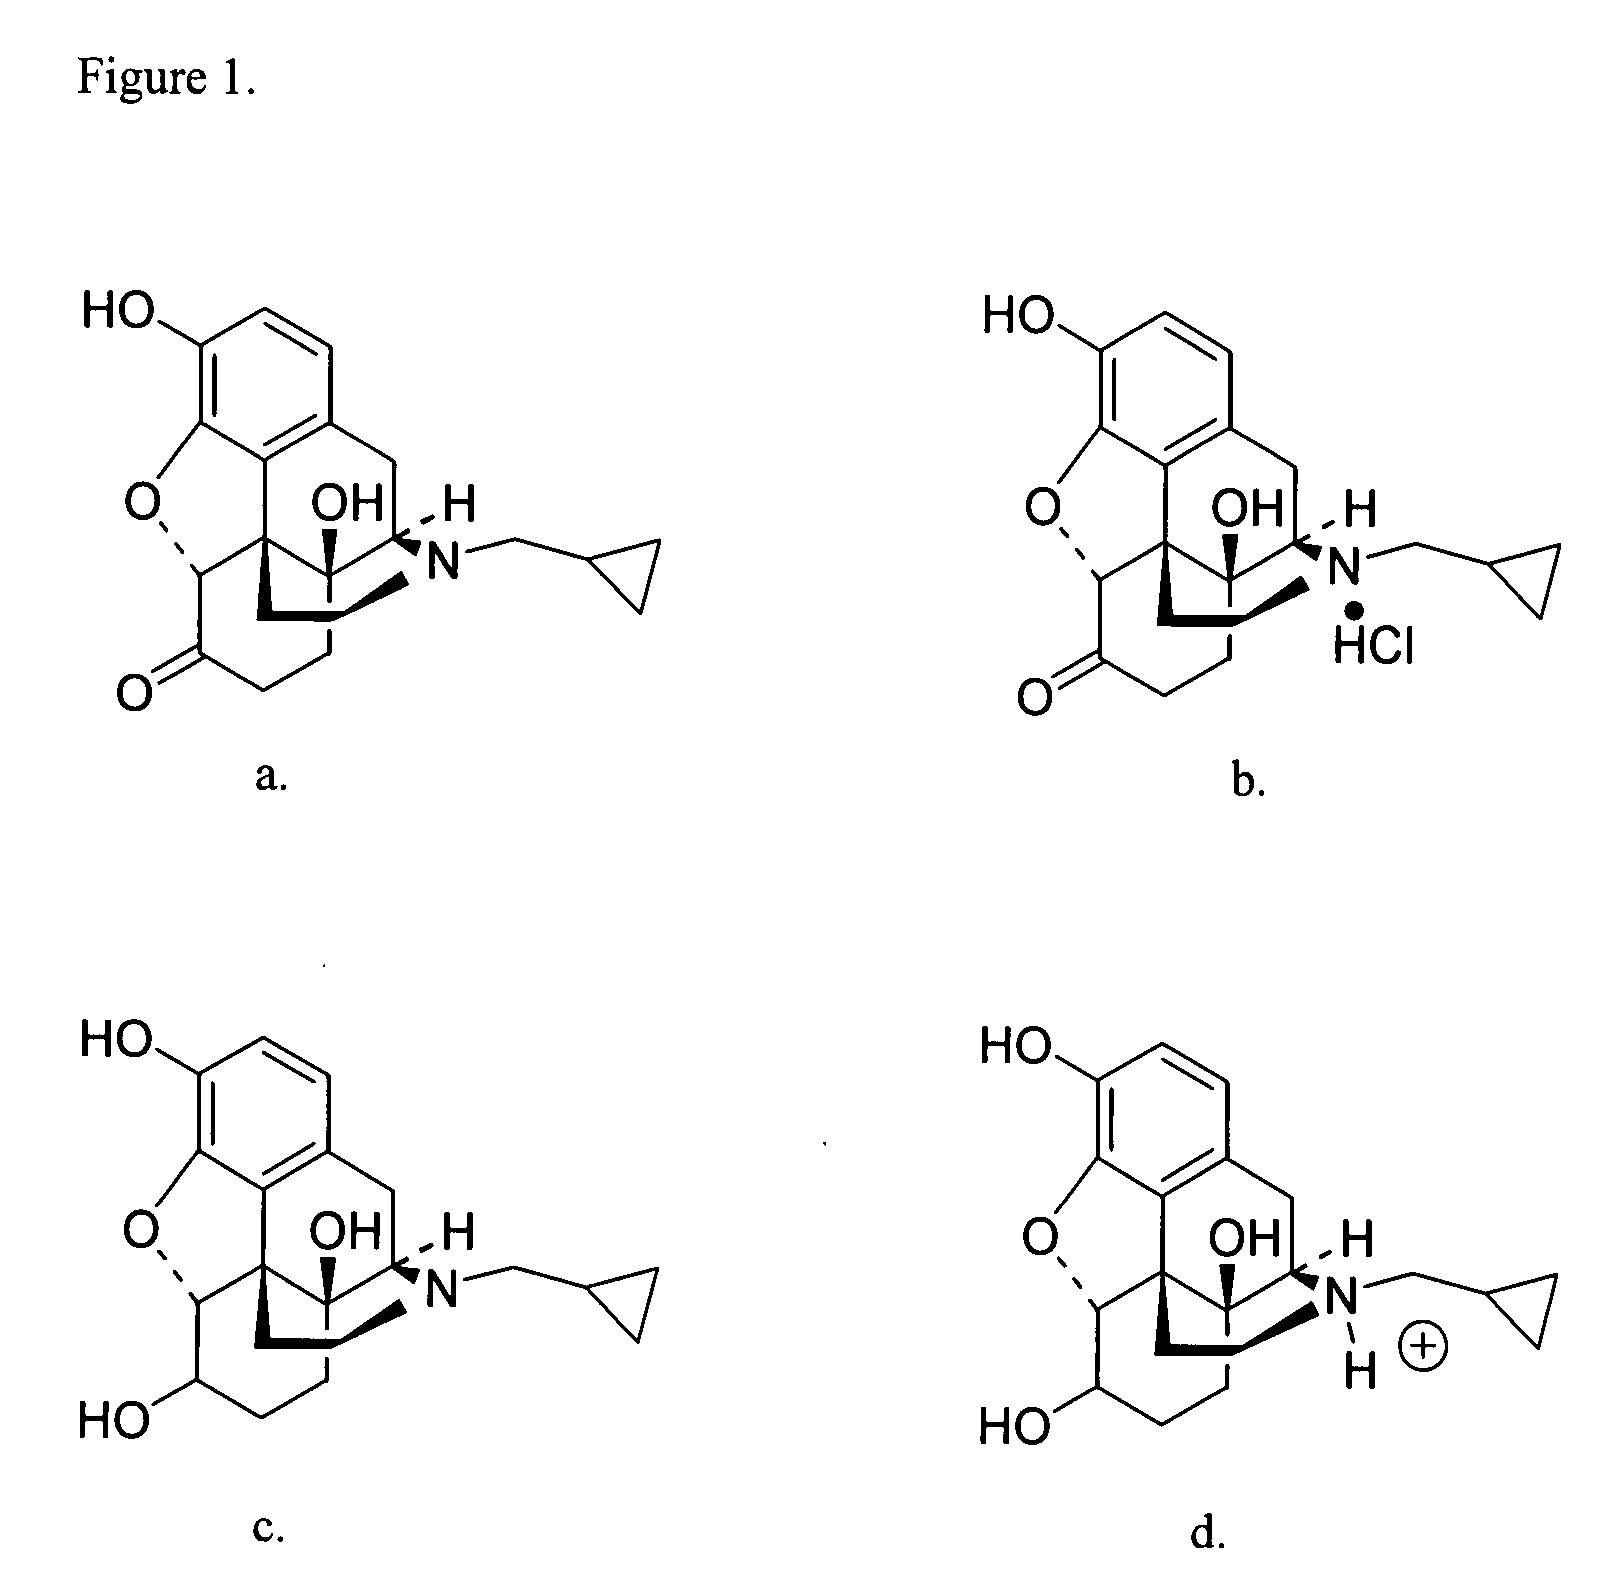 Transdermal delivery of naltrexone hydrochloride, naltrexol hydrochloride, and bis(hydroxy-methyl)propionyl-3-0 ester naltrexone using microneedles